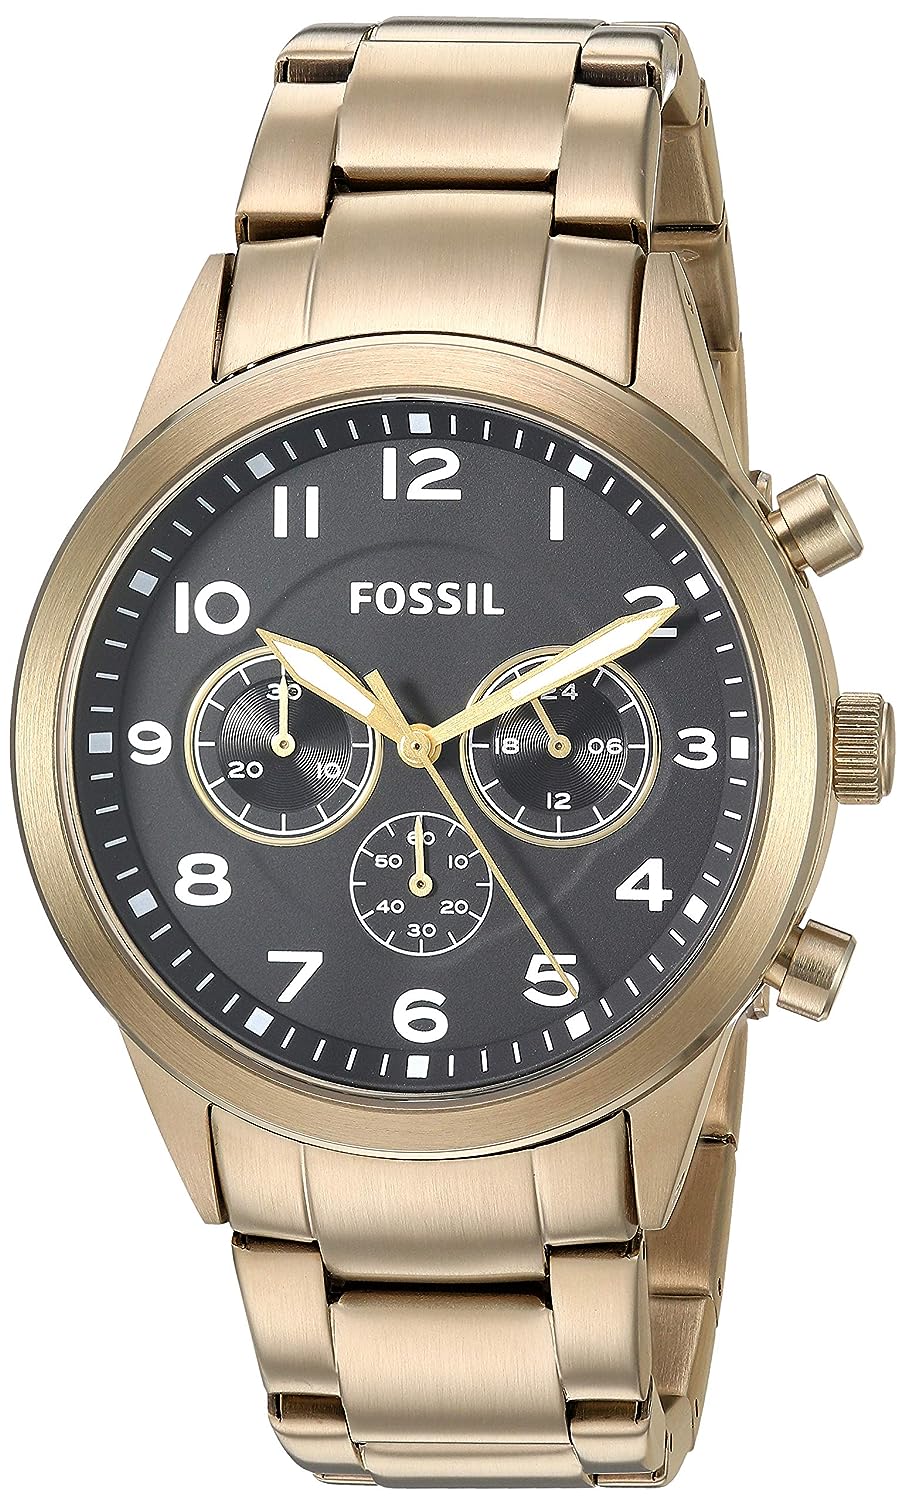 Fossil Men's Flynn Pilot Stainless Steel Watch - BQ2121, Gold - 3alababak